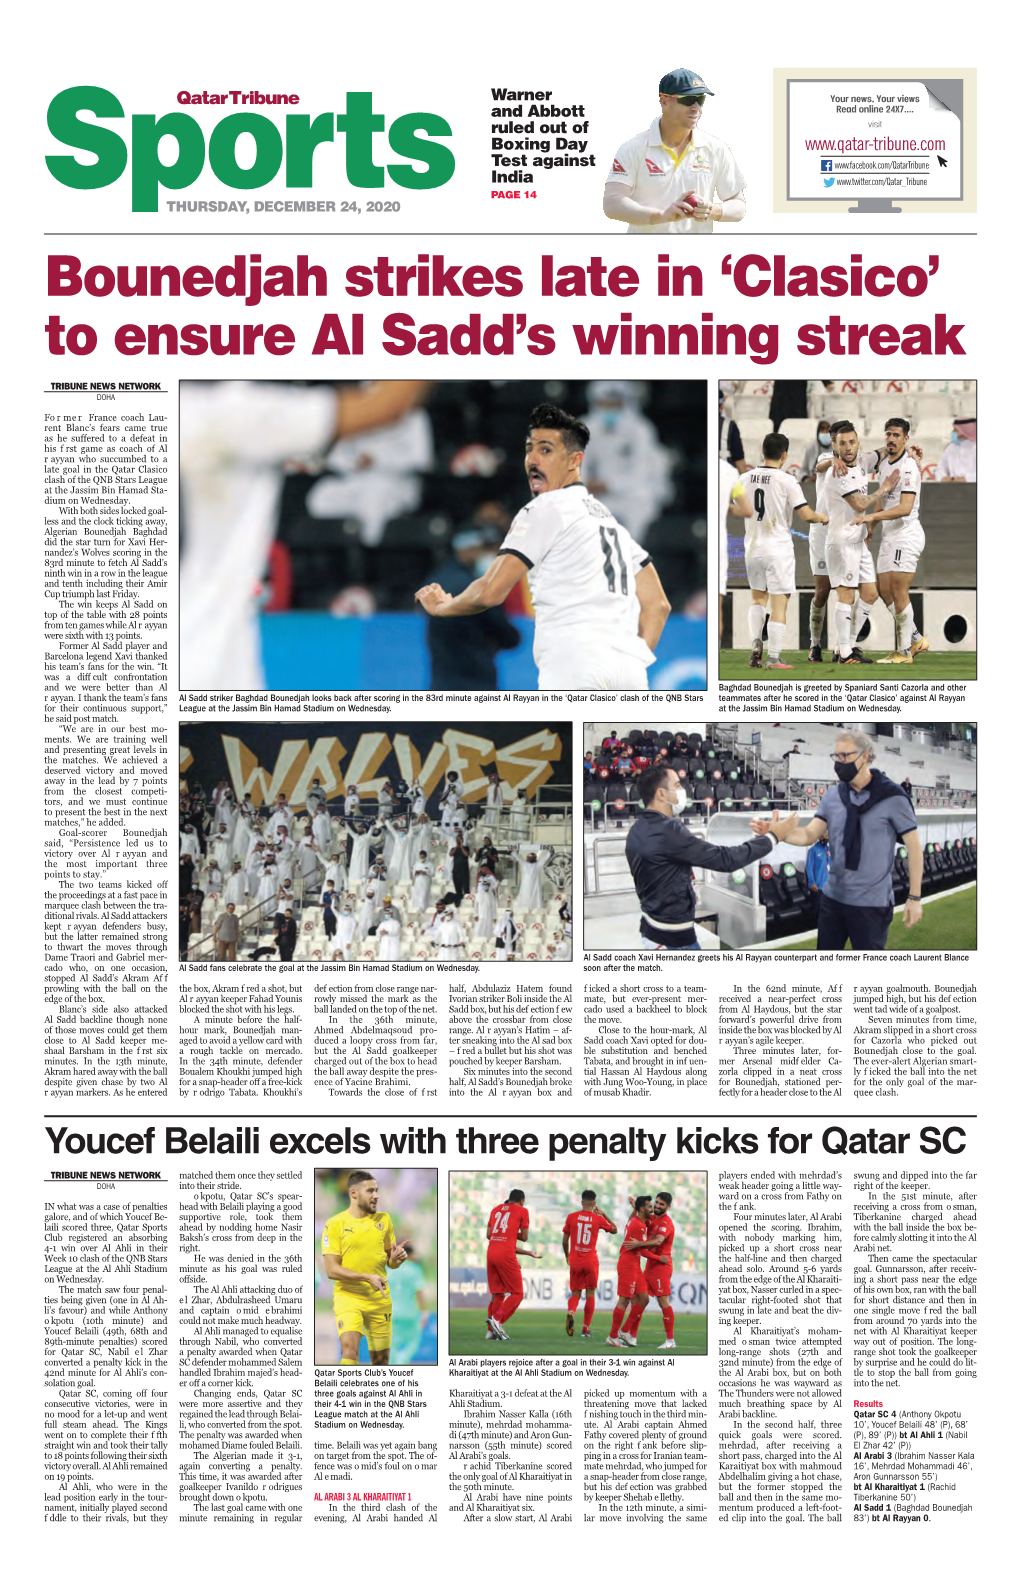 Bounedjah Strikes Late in 'Clasico' to Ensure Al Sadd's Winning Streak